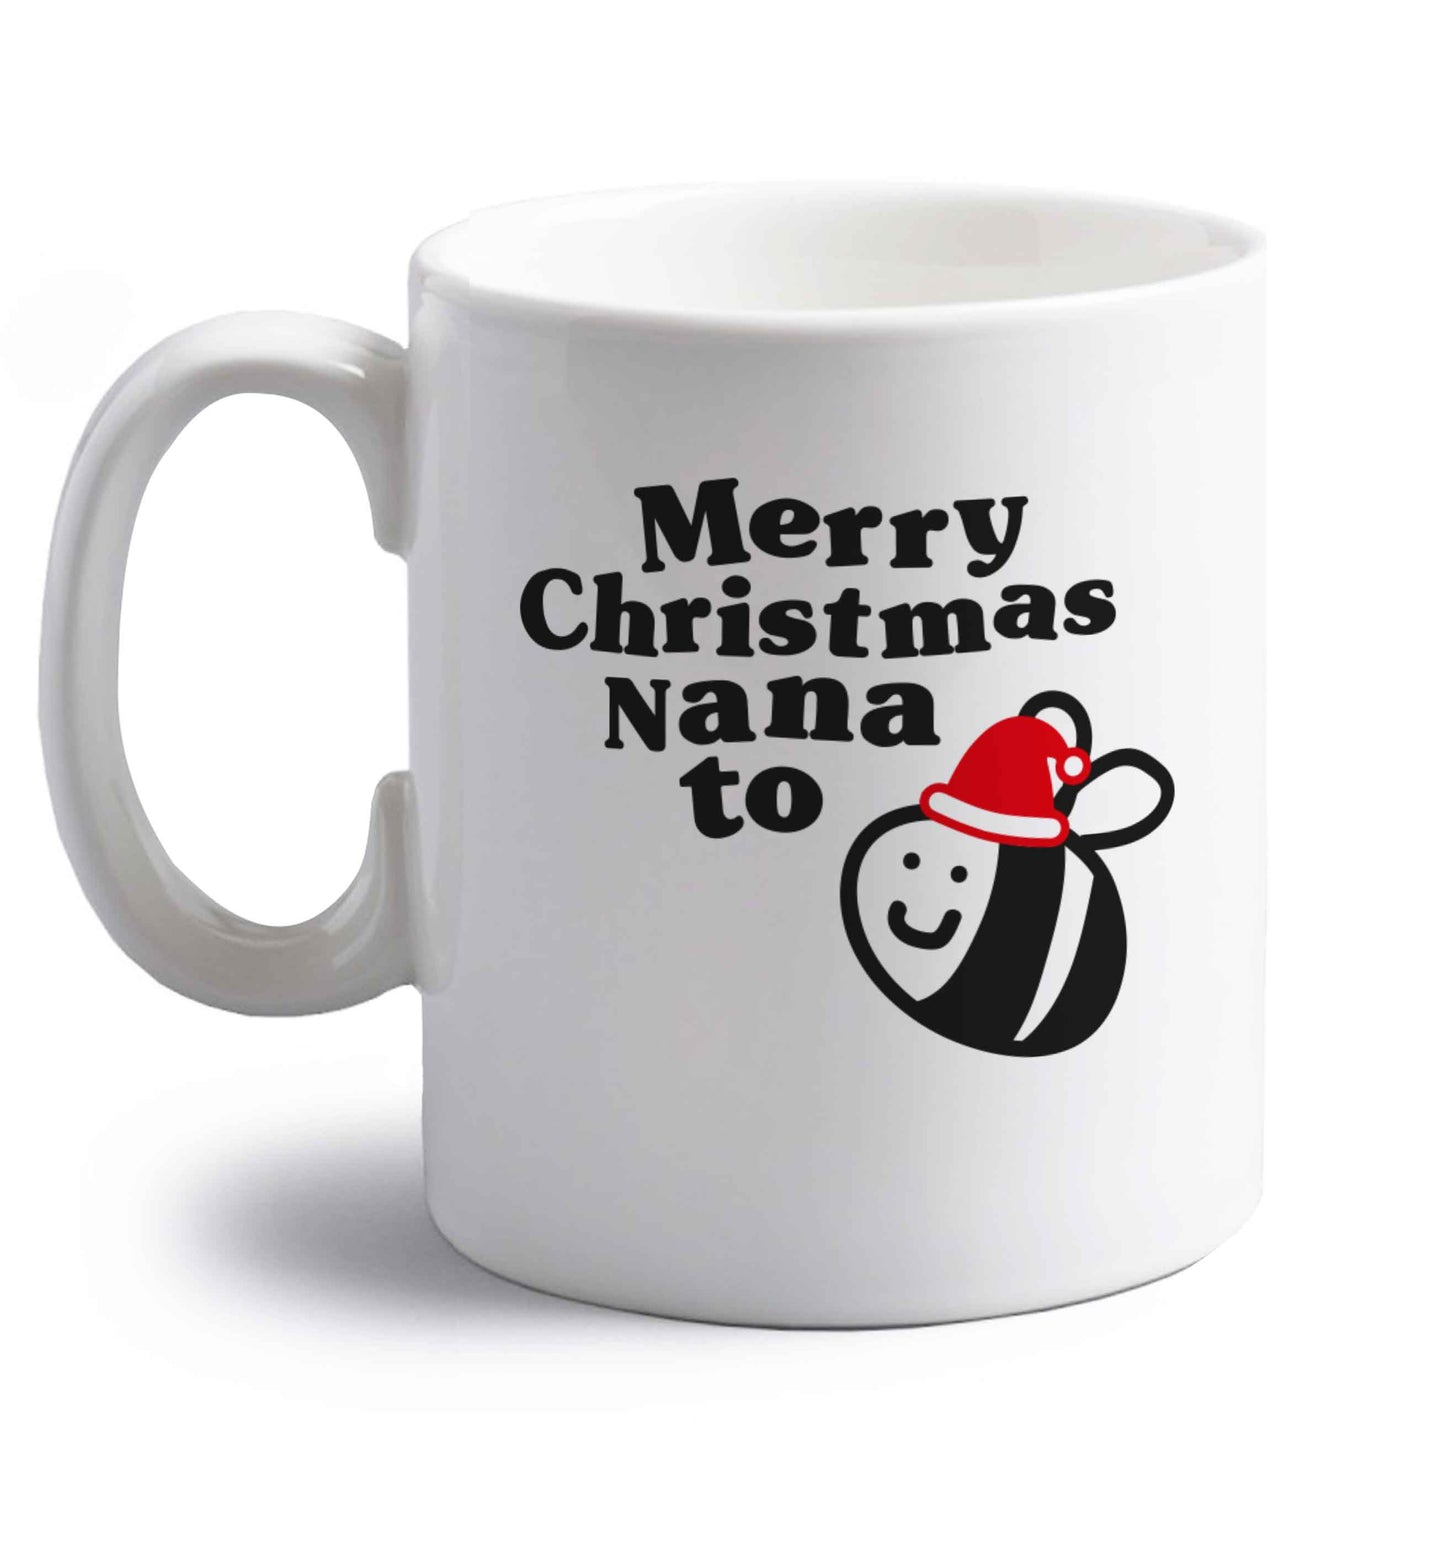 Merry Christmas nana to be right handed white ceramic mug 